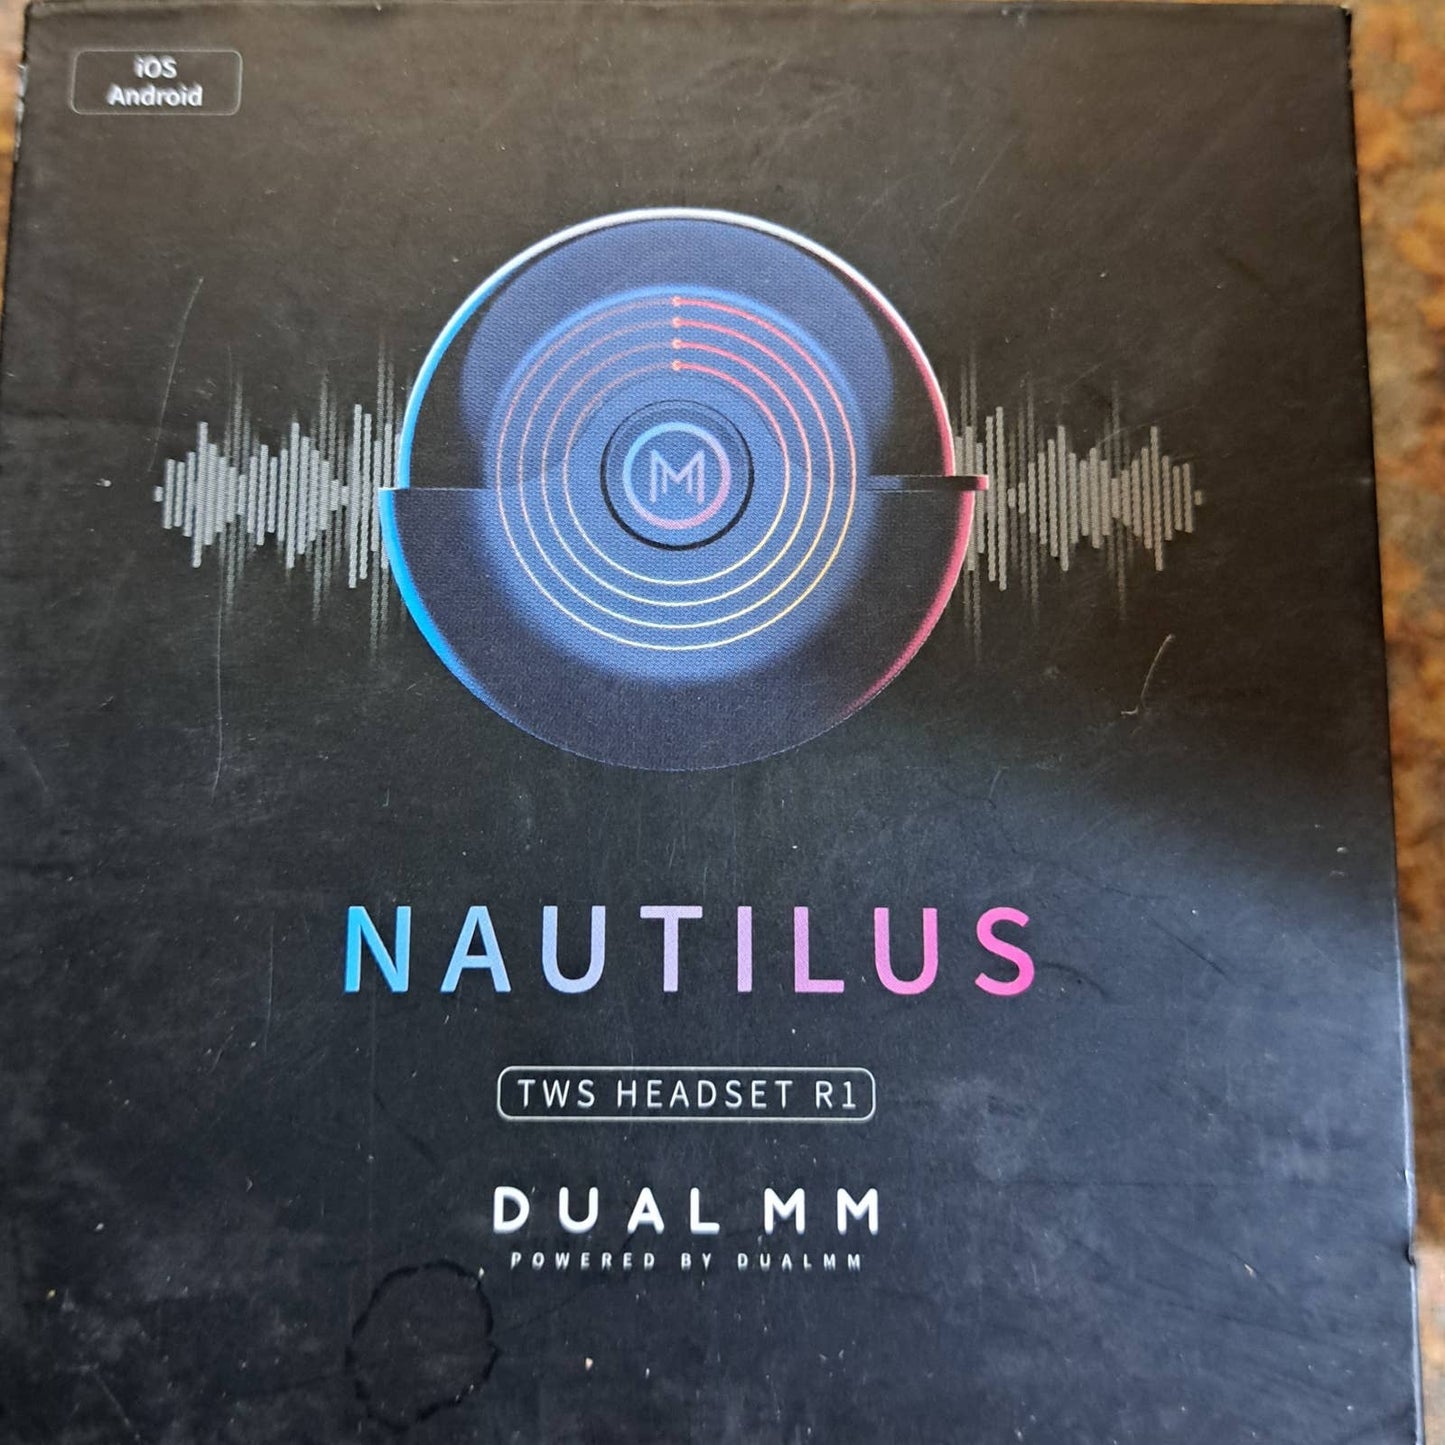 NEW Nautilus Black Bluetooth TWS Dual MM